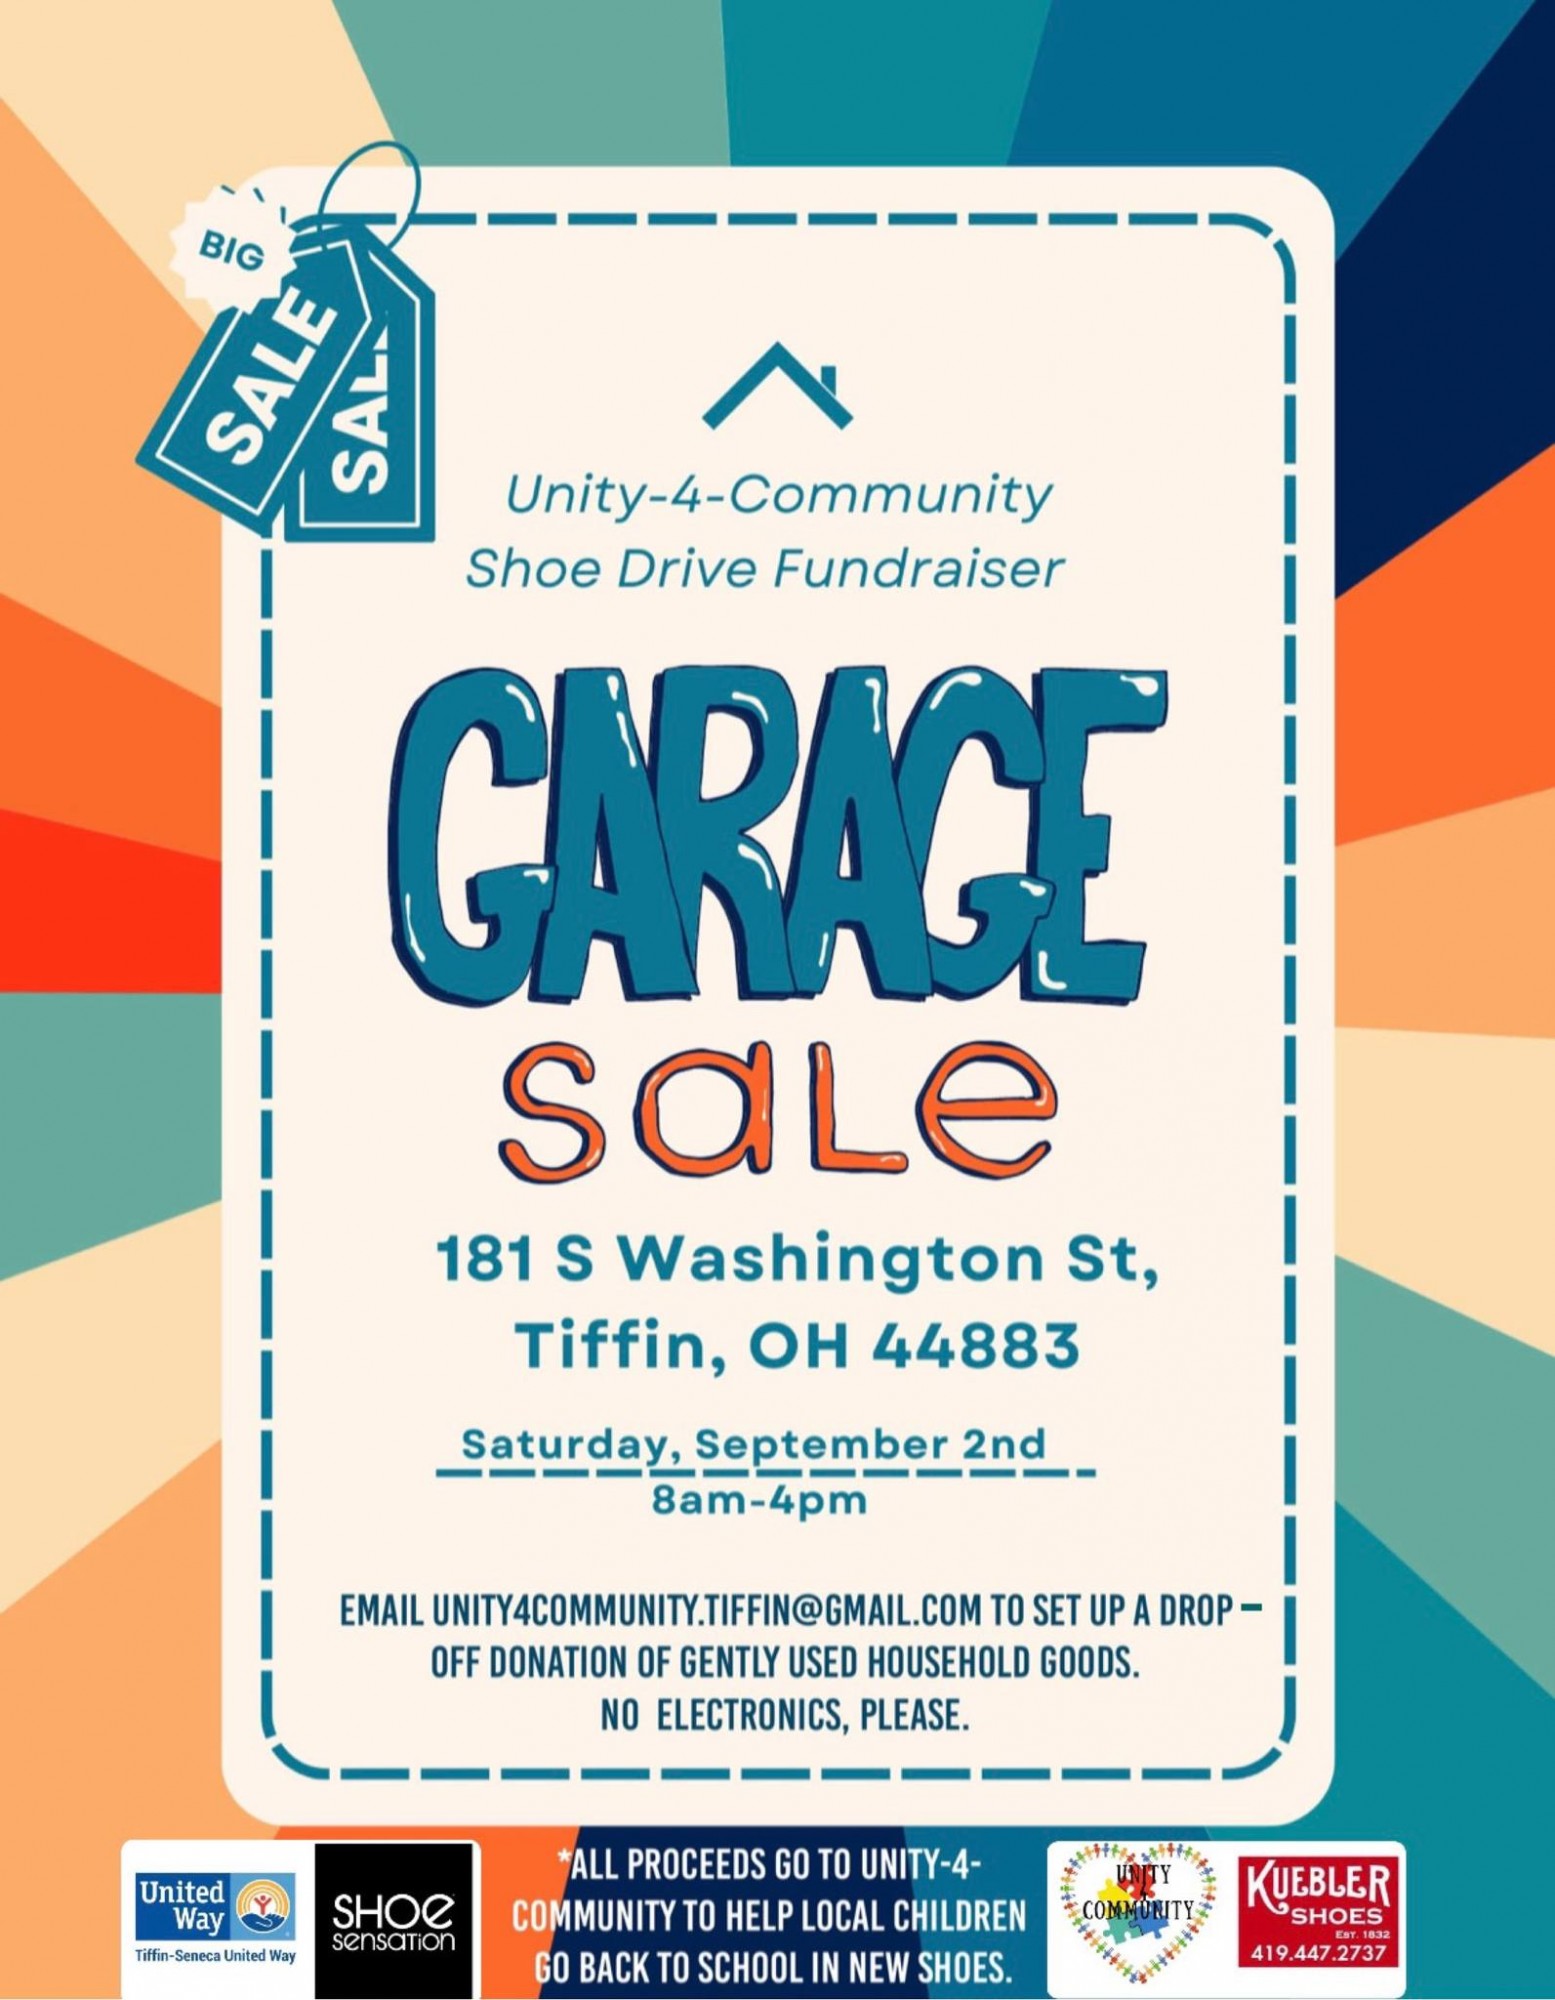 Unity-4-Community Garage Sale